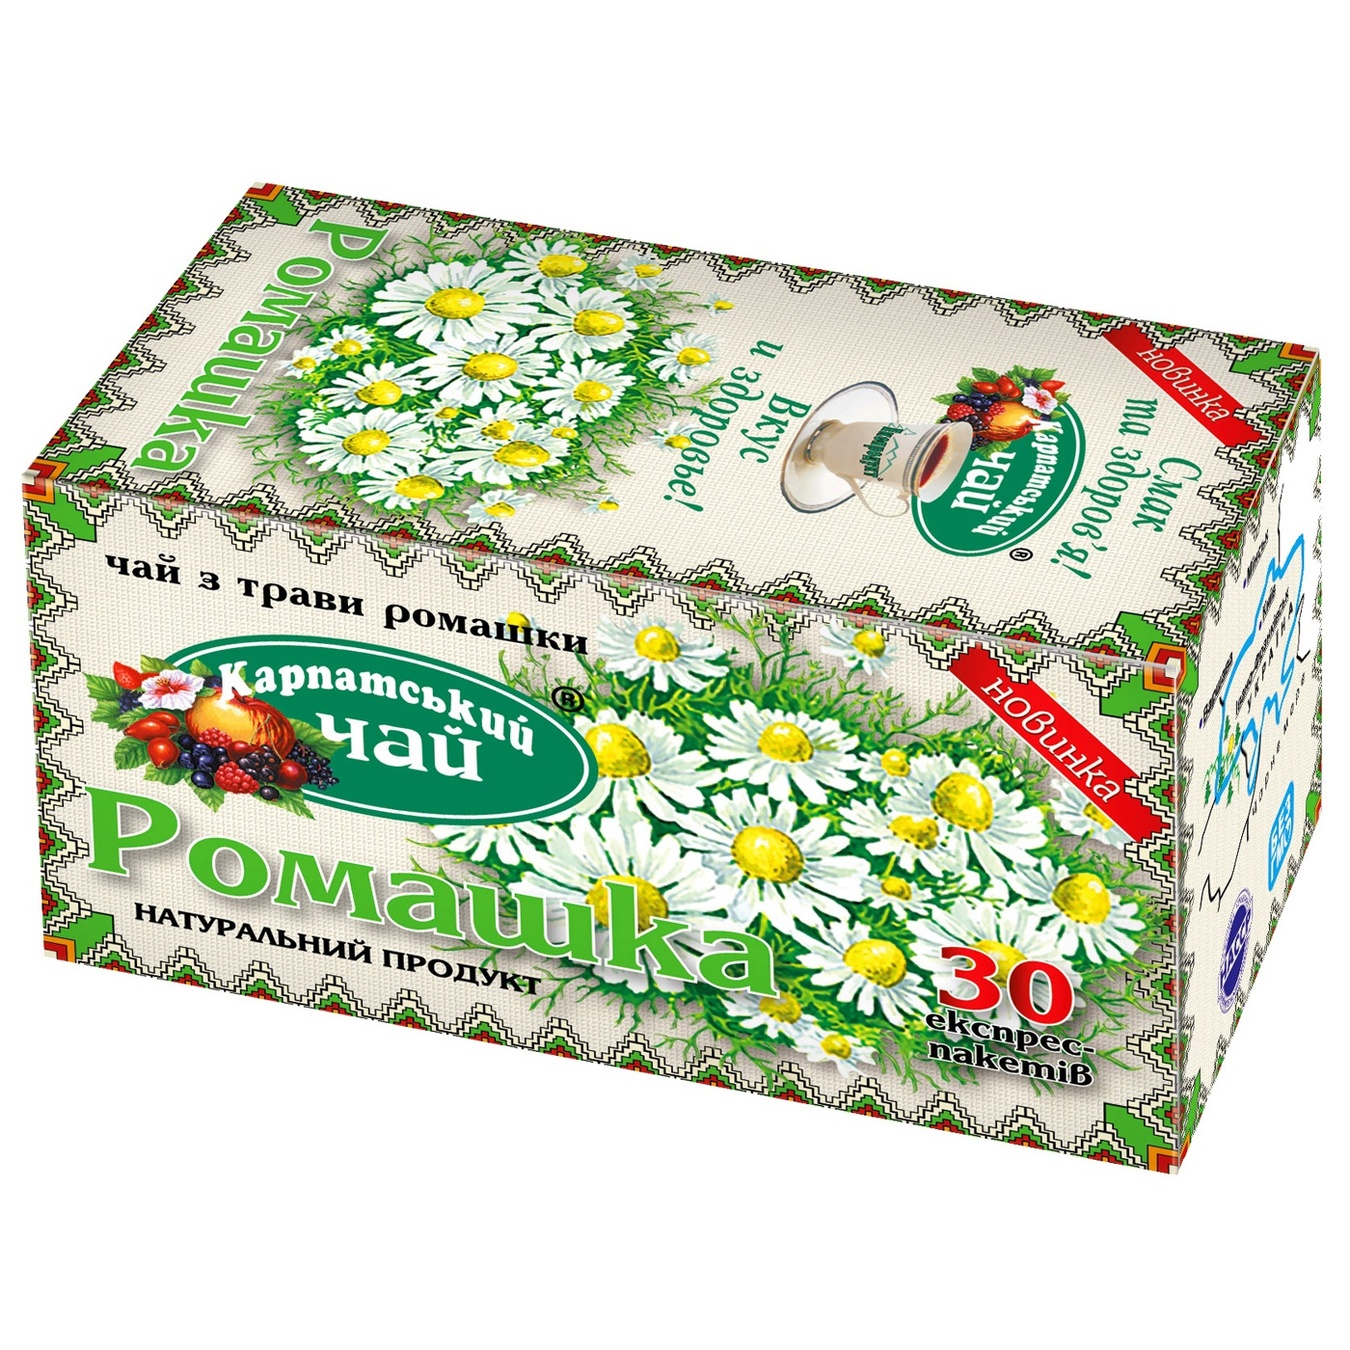 Carpathian Tea Chamomile herbal tea 30pcs 1g